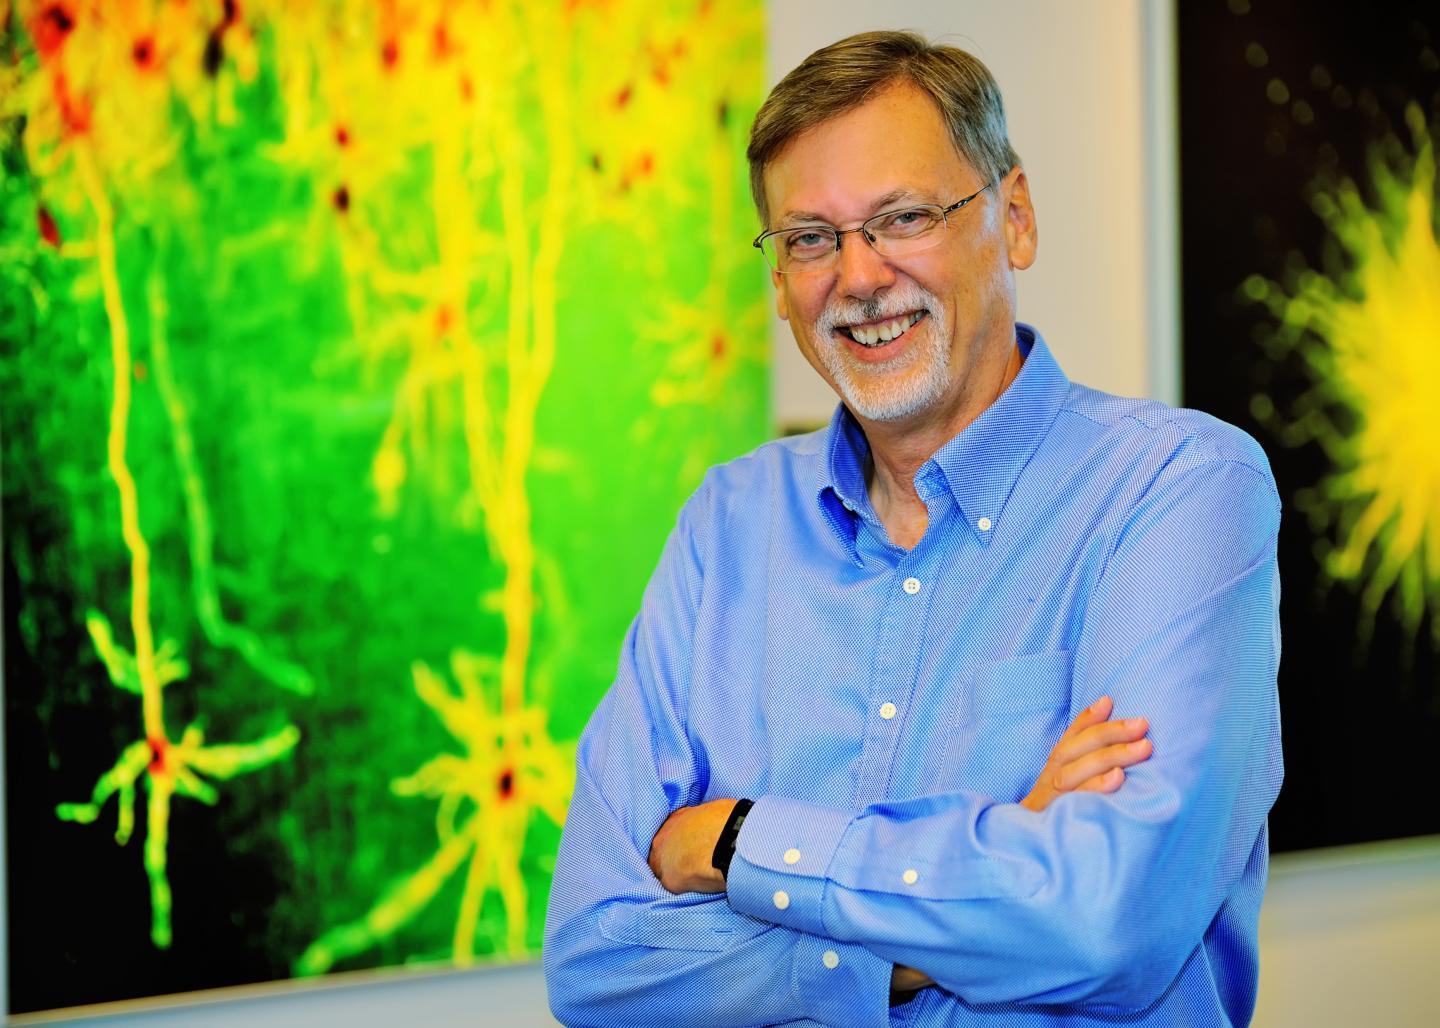 David Fitzpatrick, Max Planck Florida Institute for Neuroscience